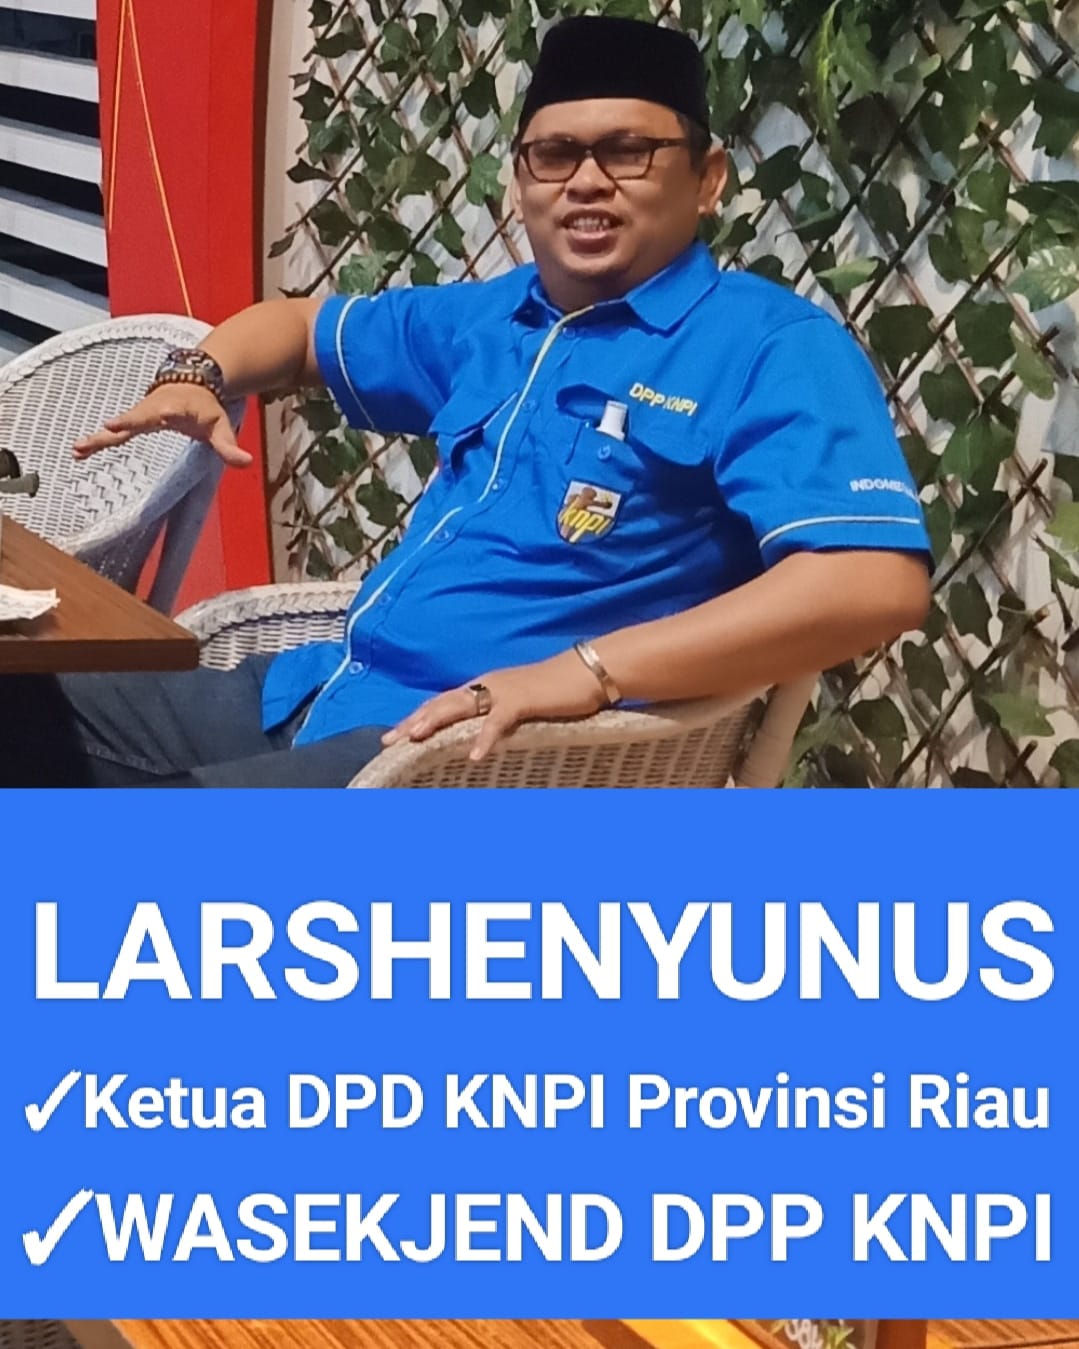 KNPI Riau Harap Pernyataan Anggota Komisi VII DPR-RI di Tindaklanjuti, Segera Periksa, Tangkap